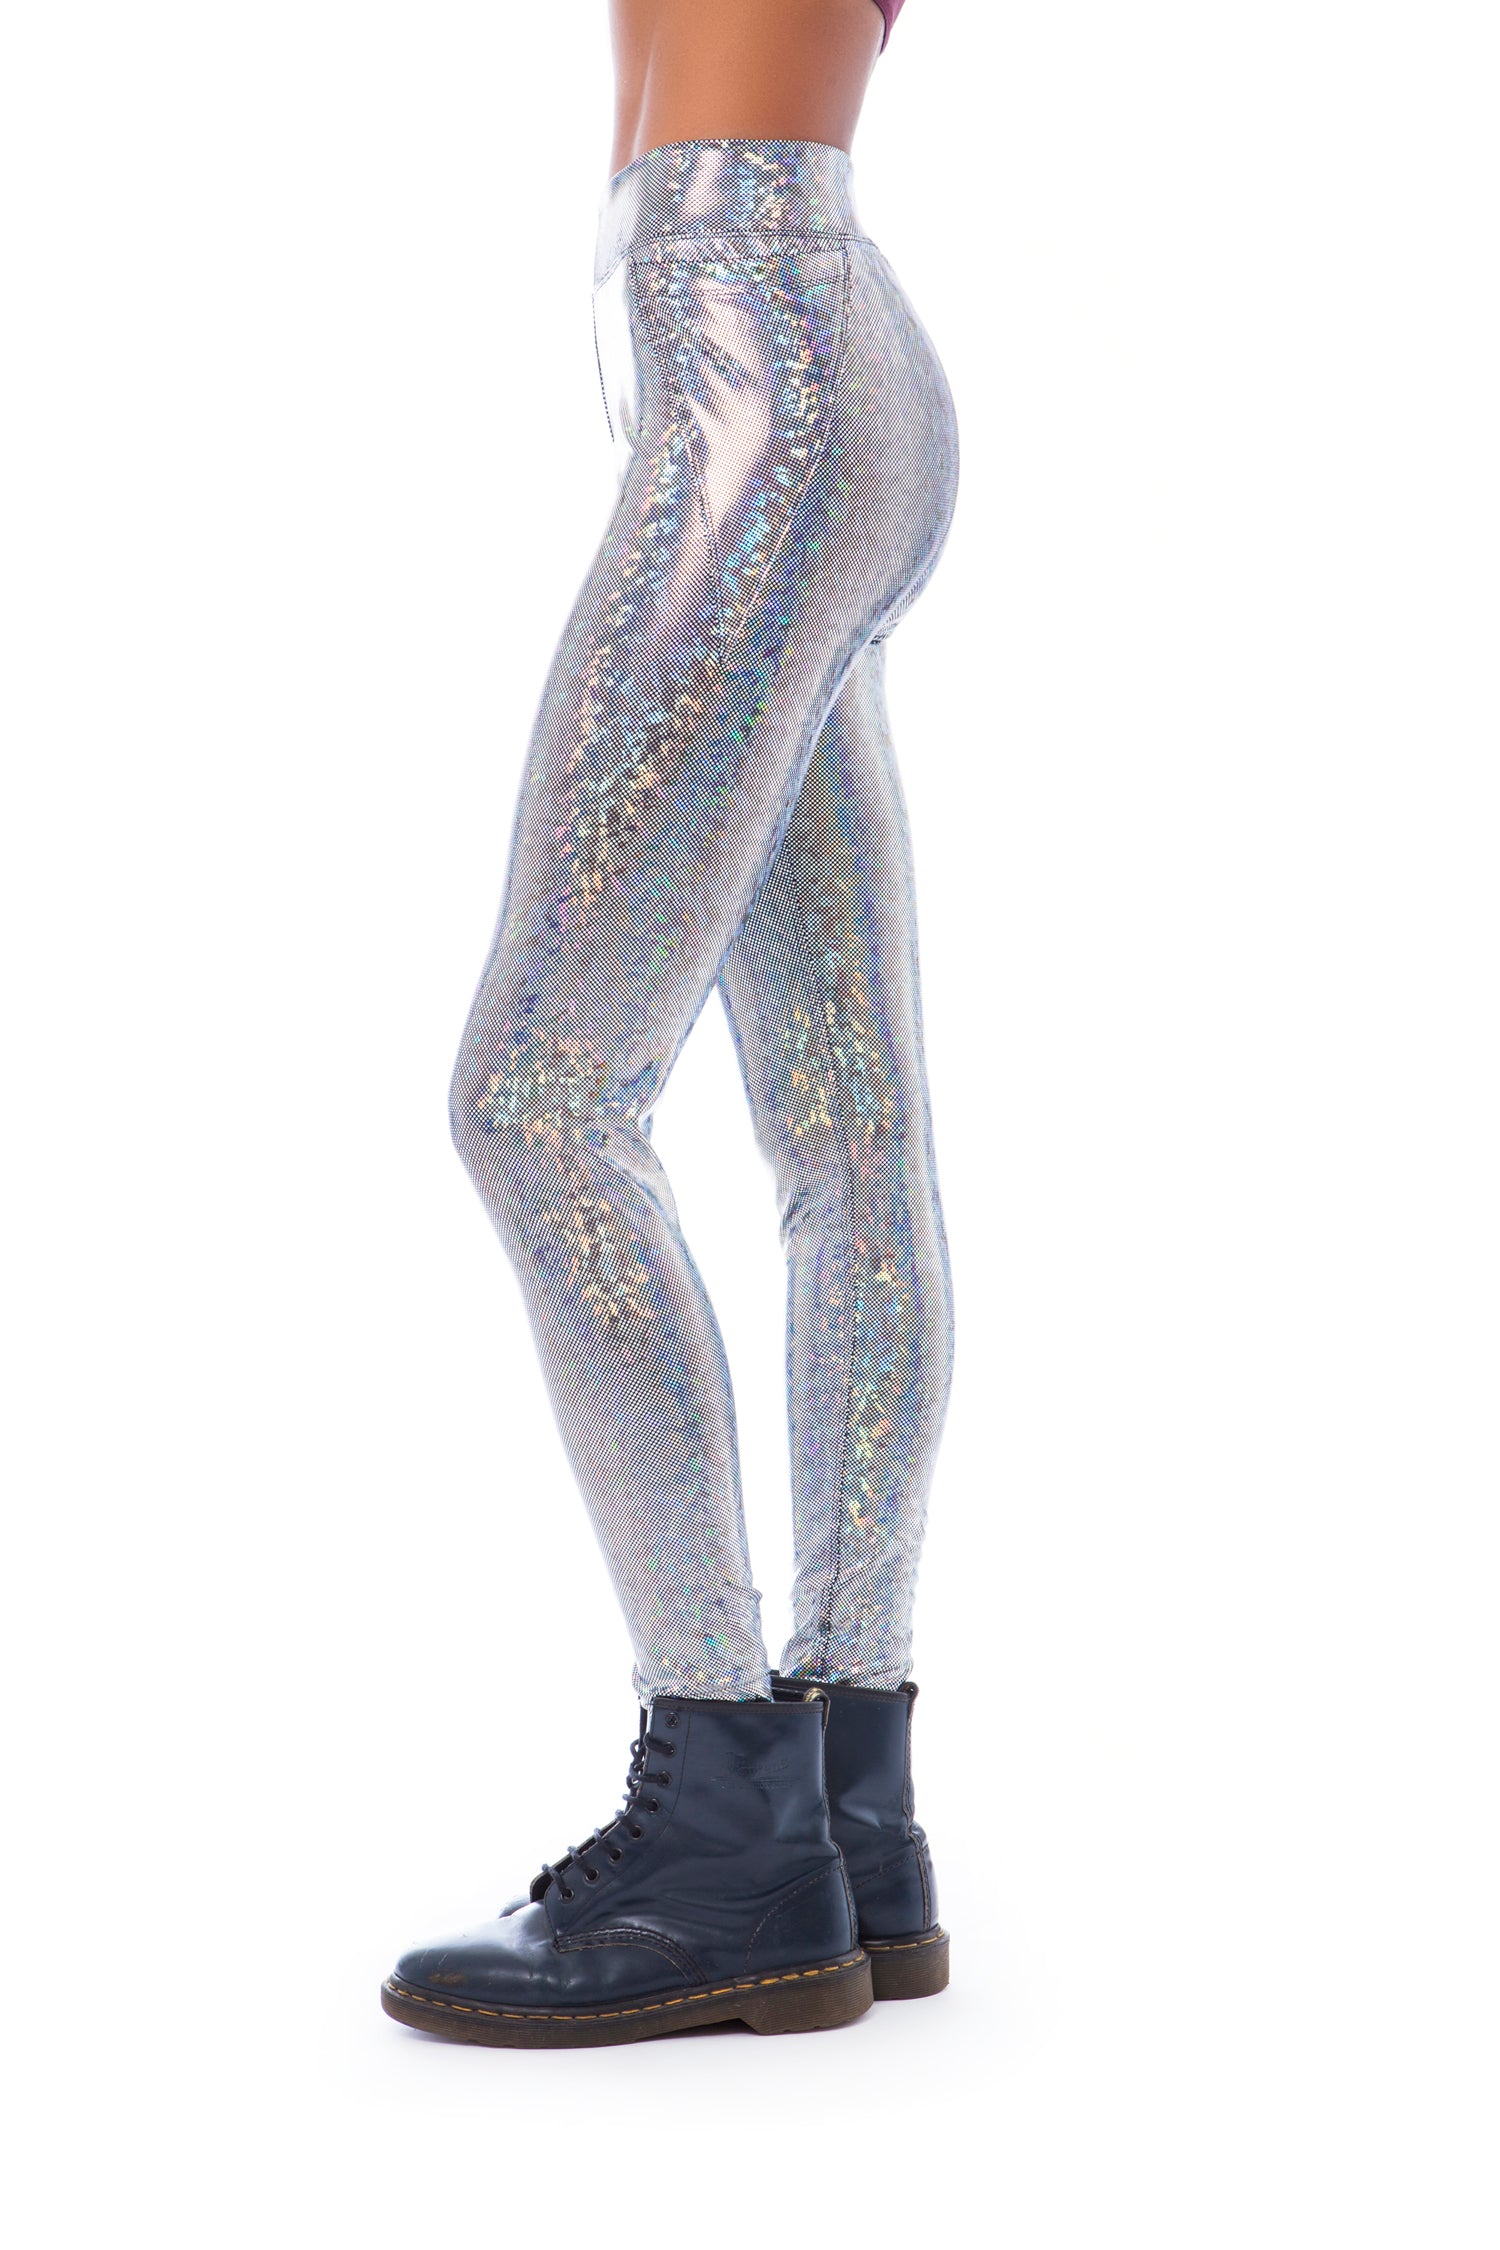 Silver Holographic Sparkle Leggings Burning Man Halloween Metallic Festival  Shiny Pants Stretch Dance Women's Men's New Years Mardi Gras -  Canada